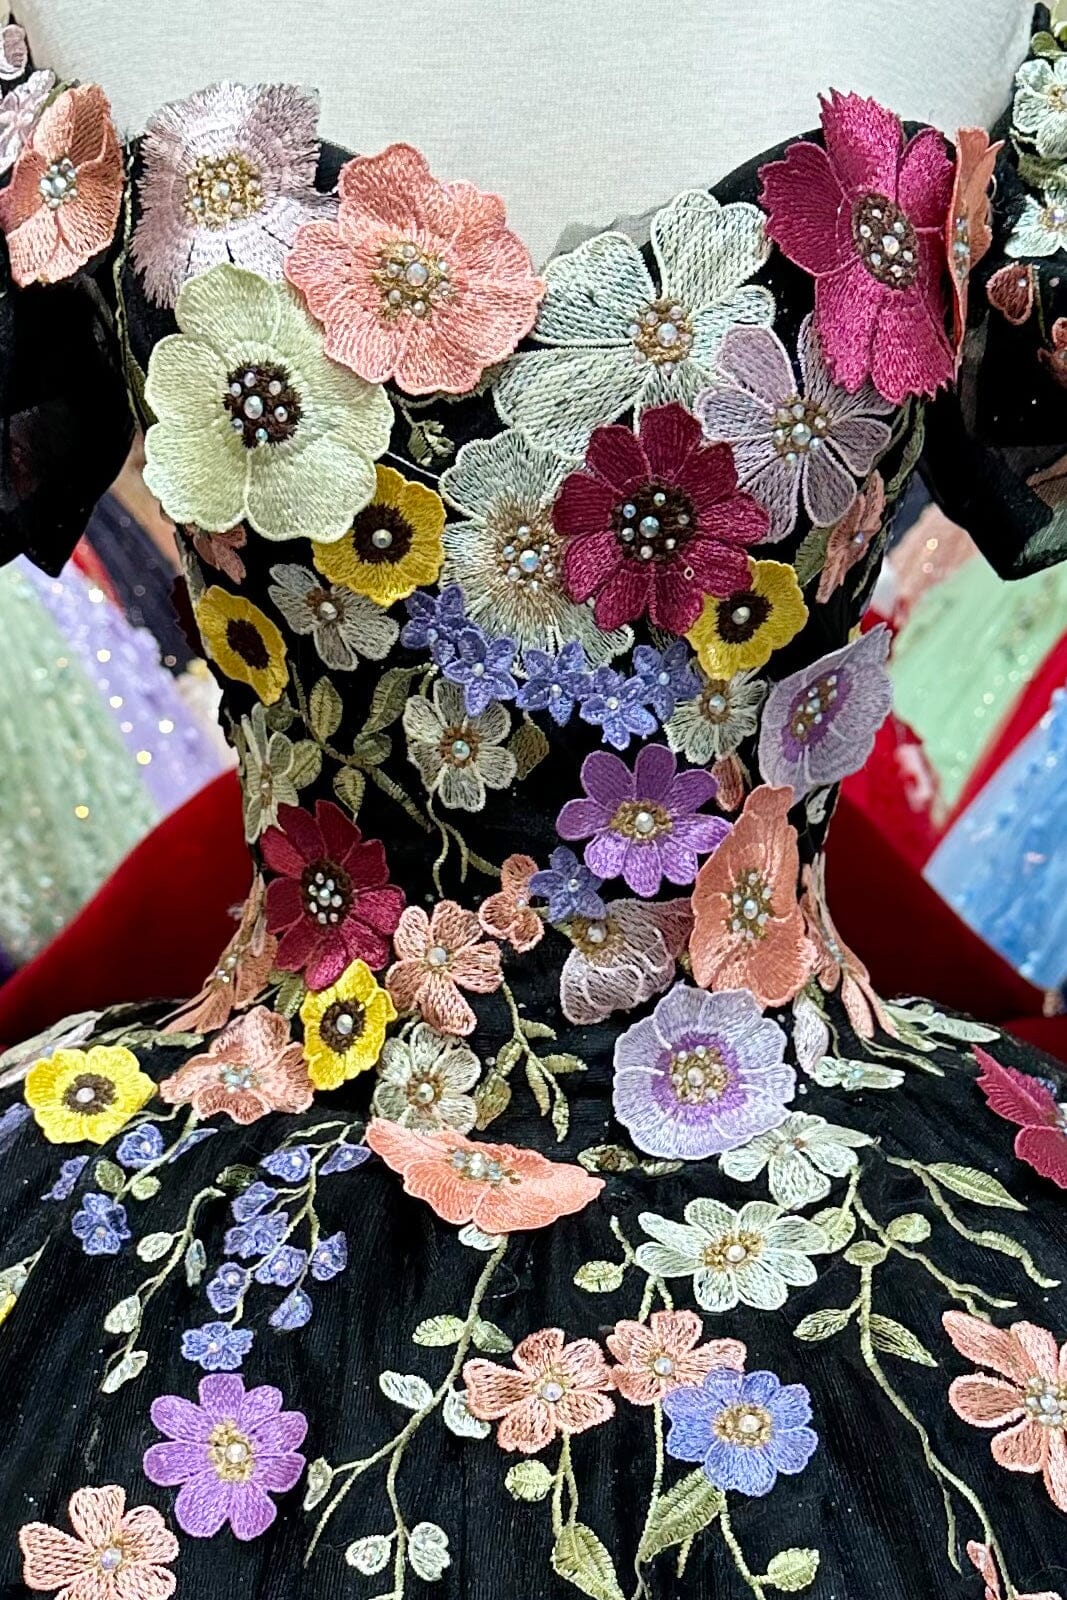 Multicolor Floral Applique Ball Gown by Elizabeth K GL3177